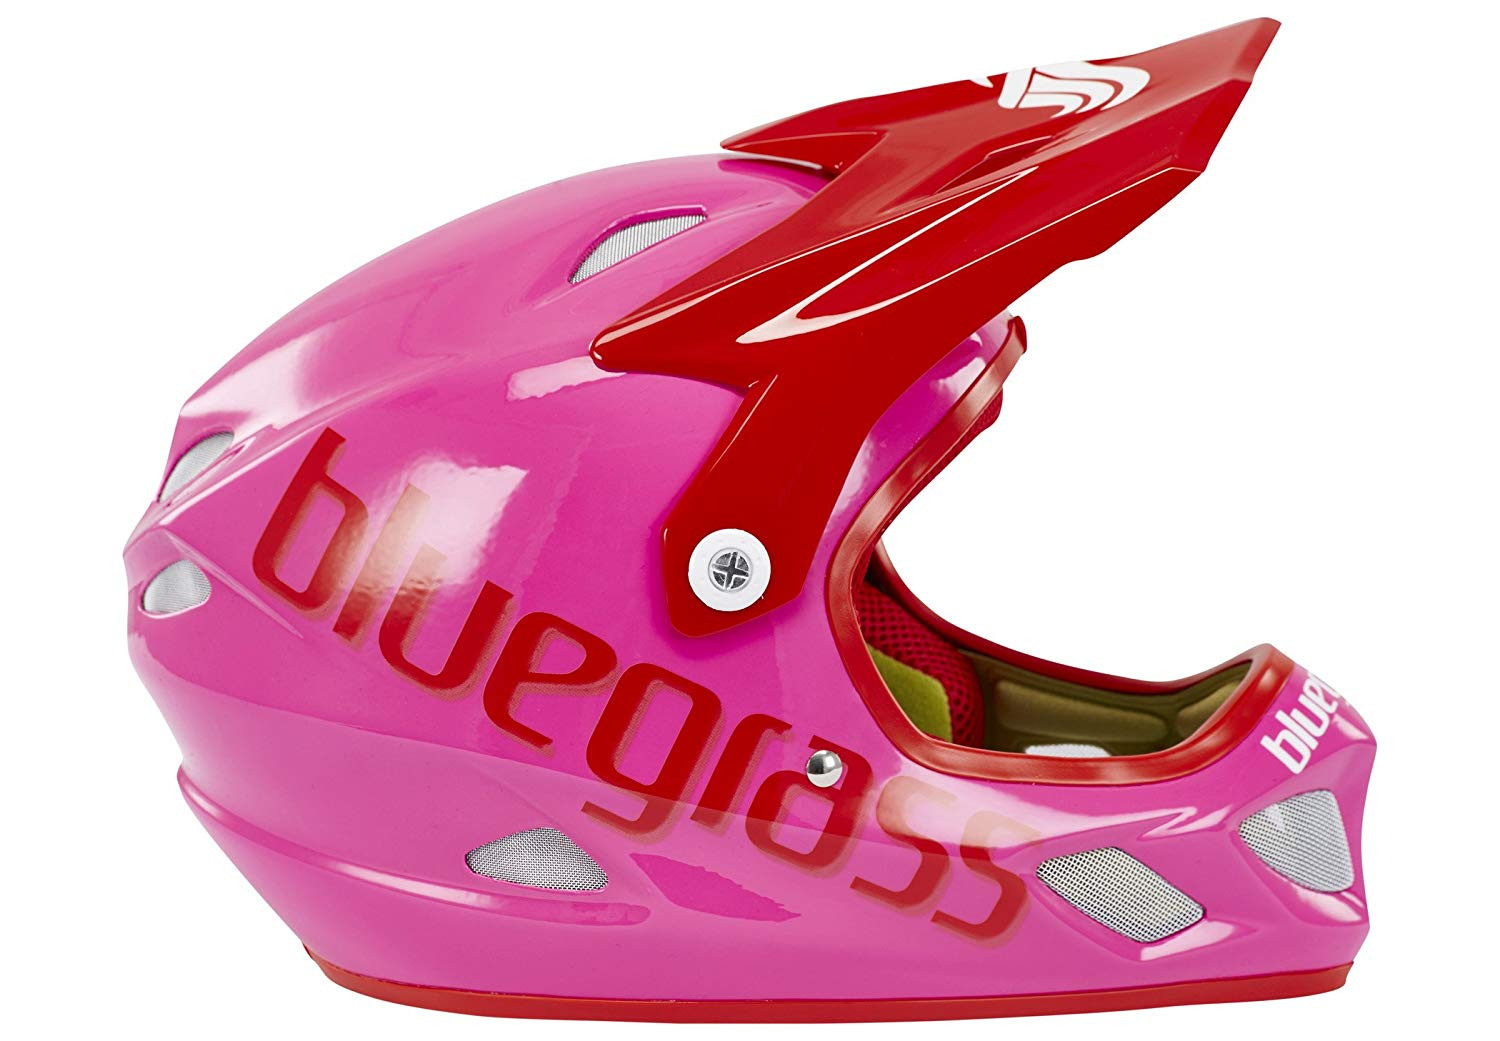 BLUEGRASS Helmet EXPLICIT Pink Size M (BG3HELG01M0PK)